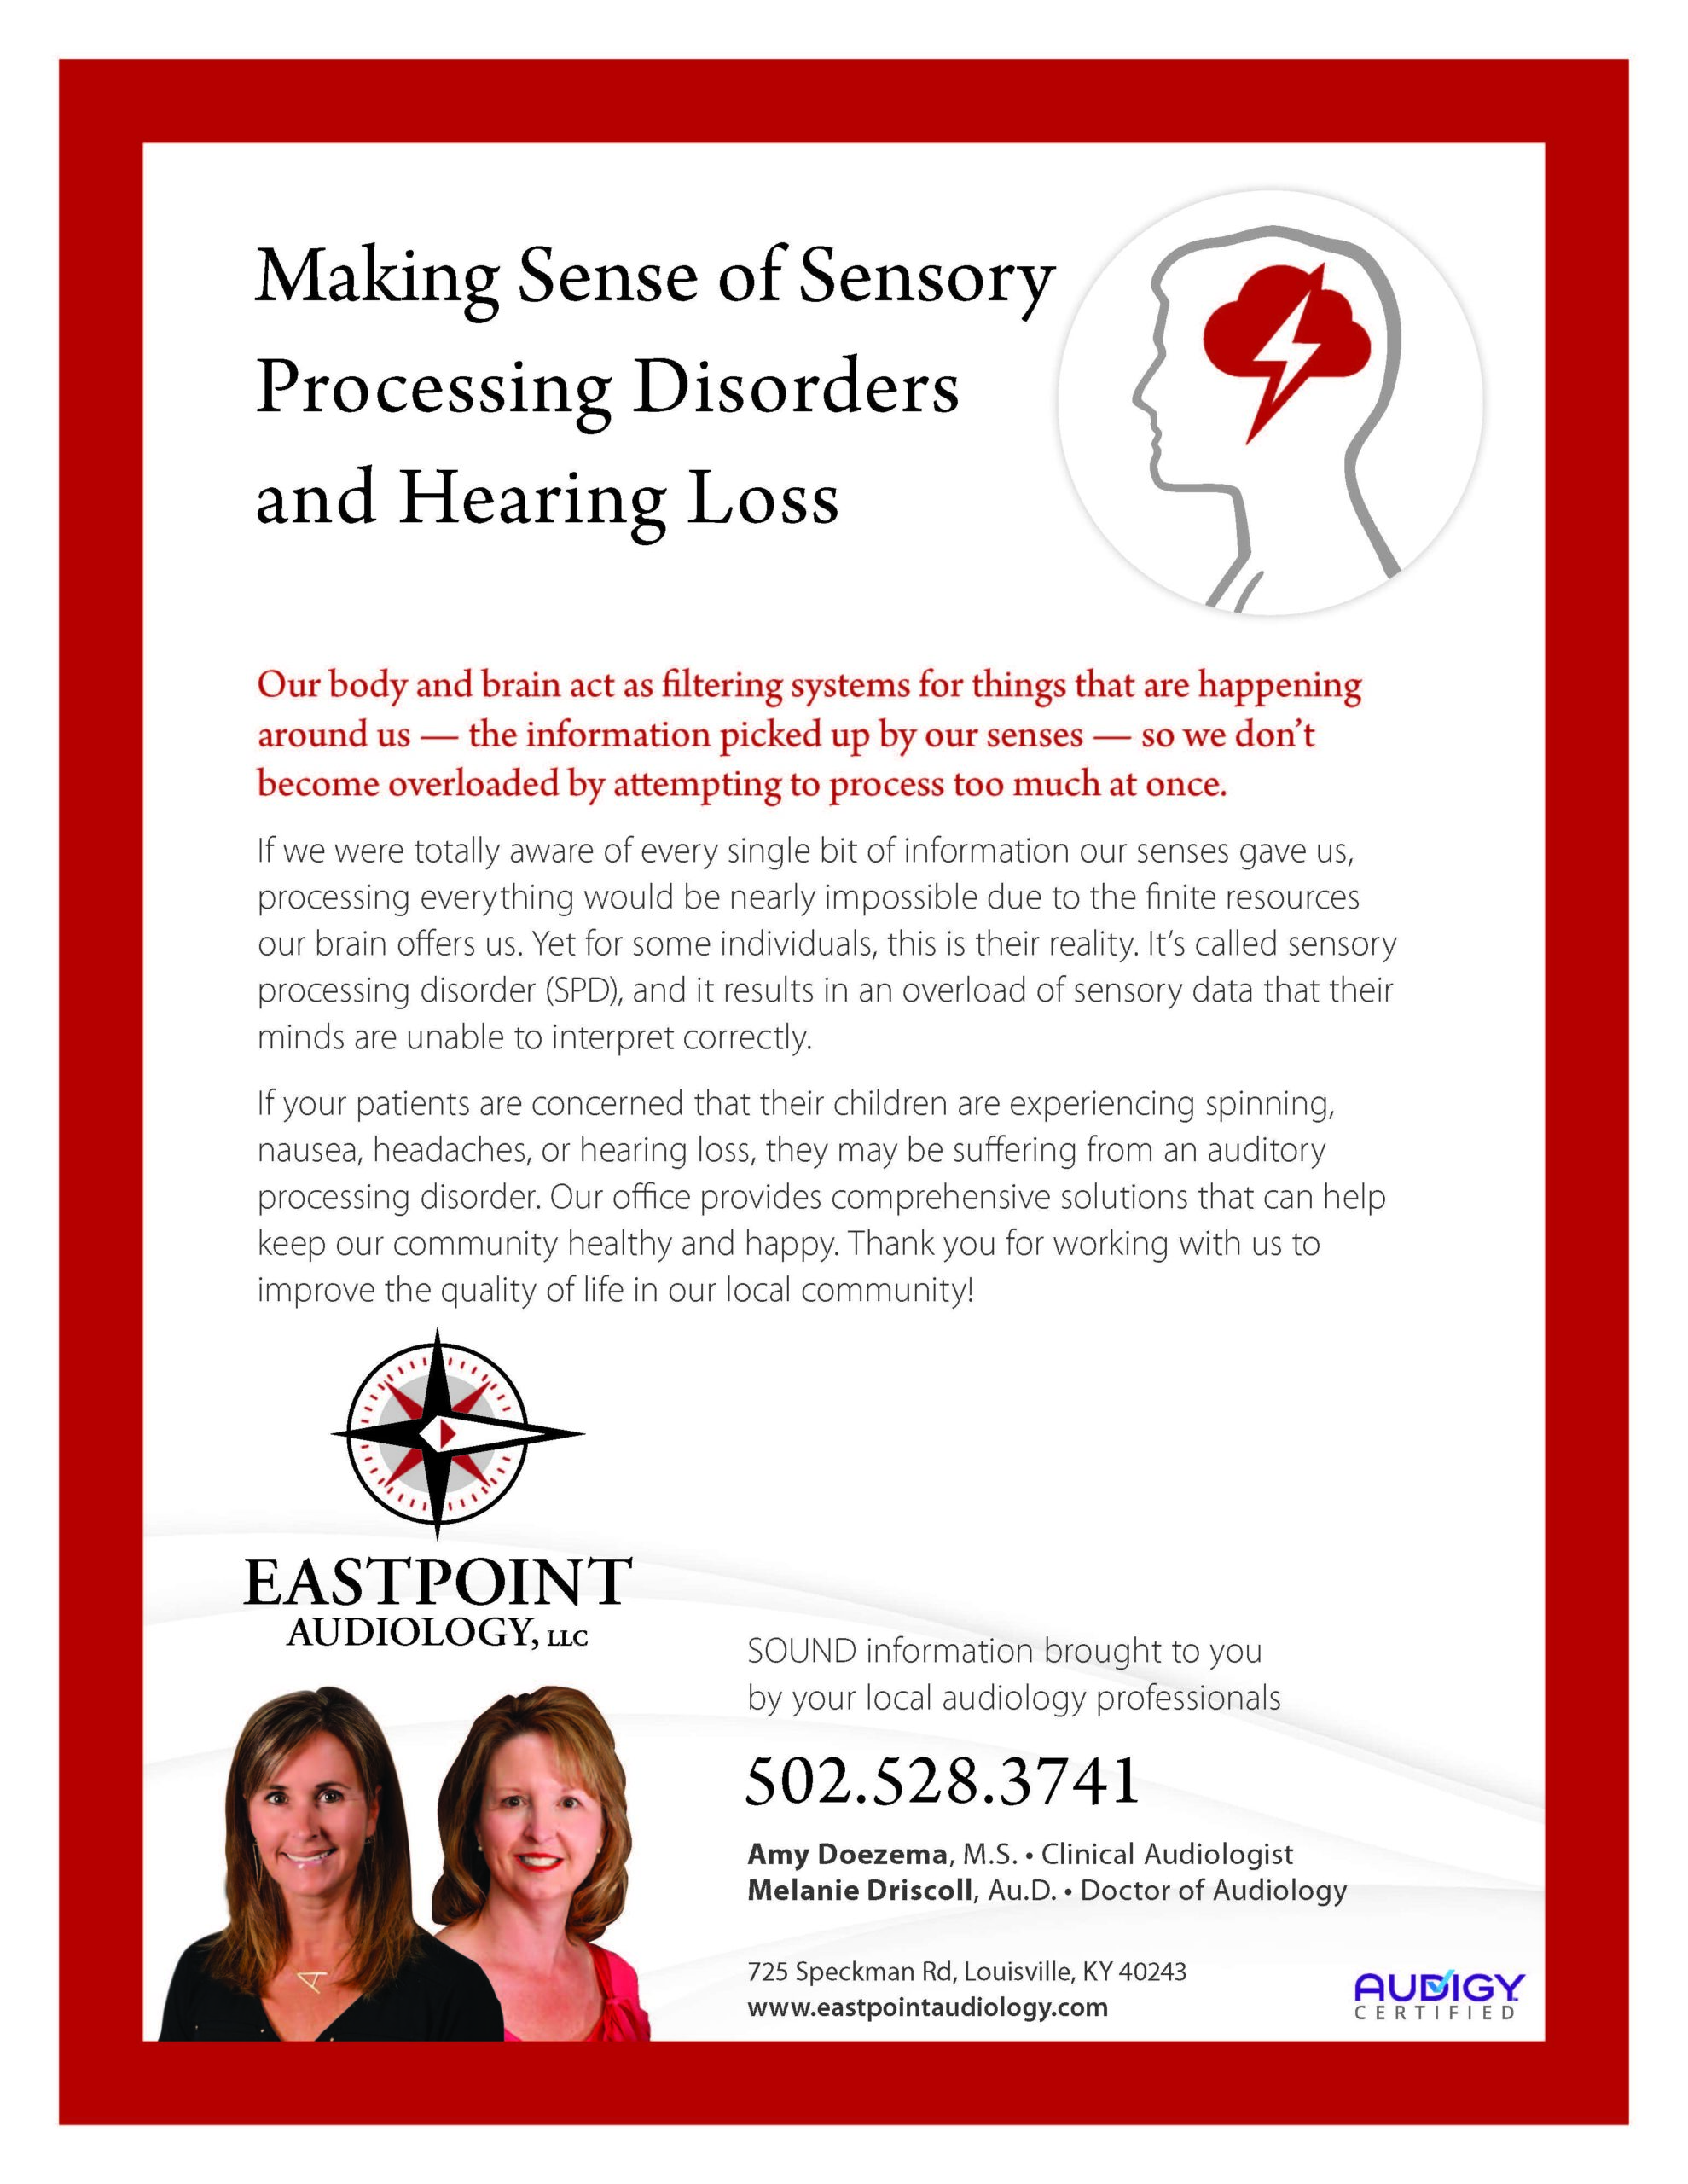 Making Sense of Sensory Processing Disorders and Hearing Loss - Newsletter